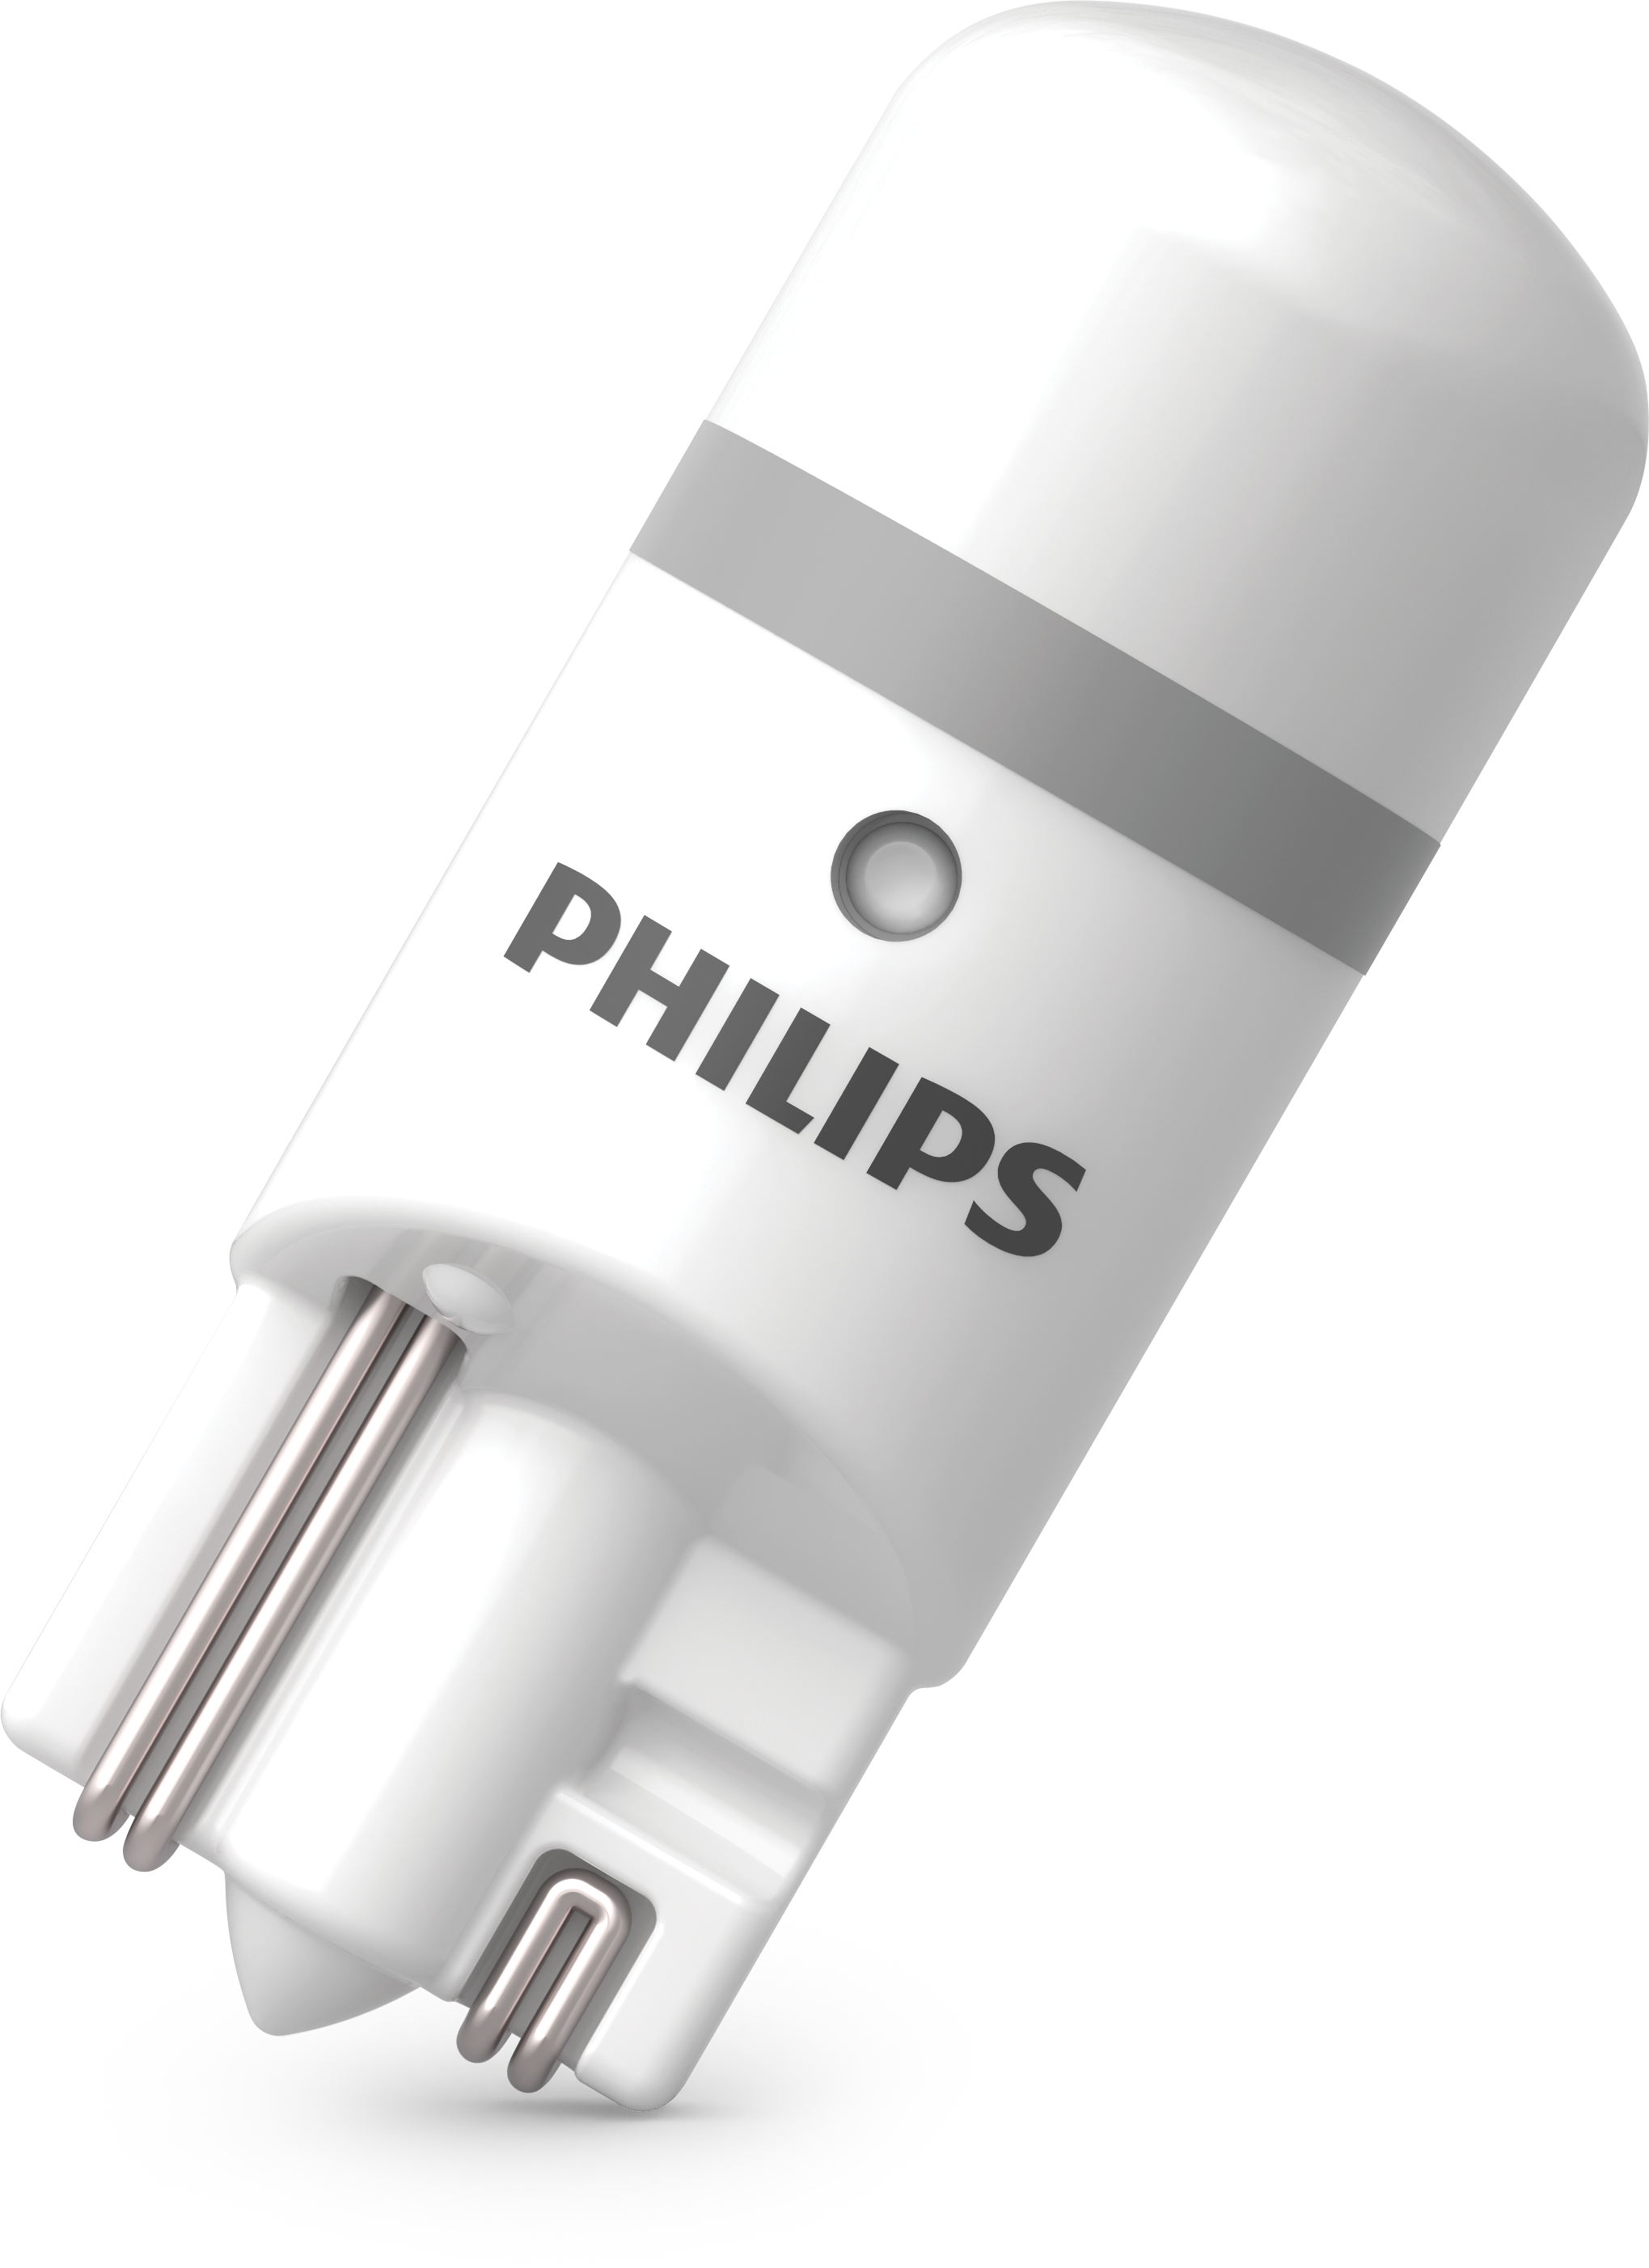 Philips Ultinon Pro6000 LED - Jetzt auch für viele Oldtimer zugelassen!,  Lumileds Germany GmbH, Story - PresseBox